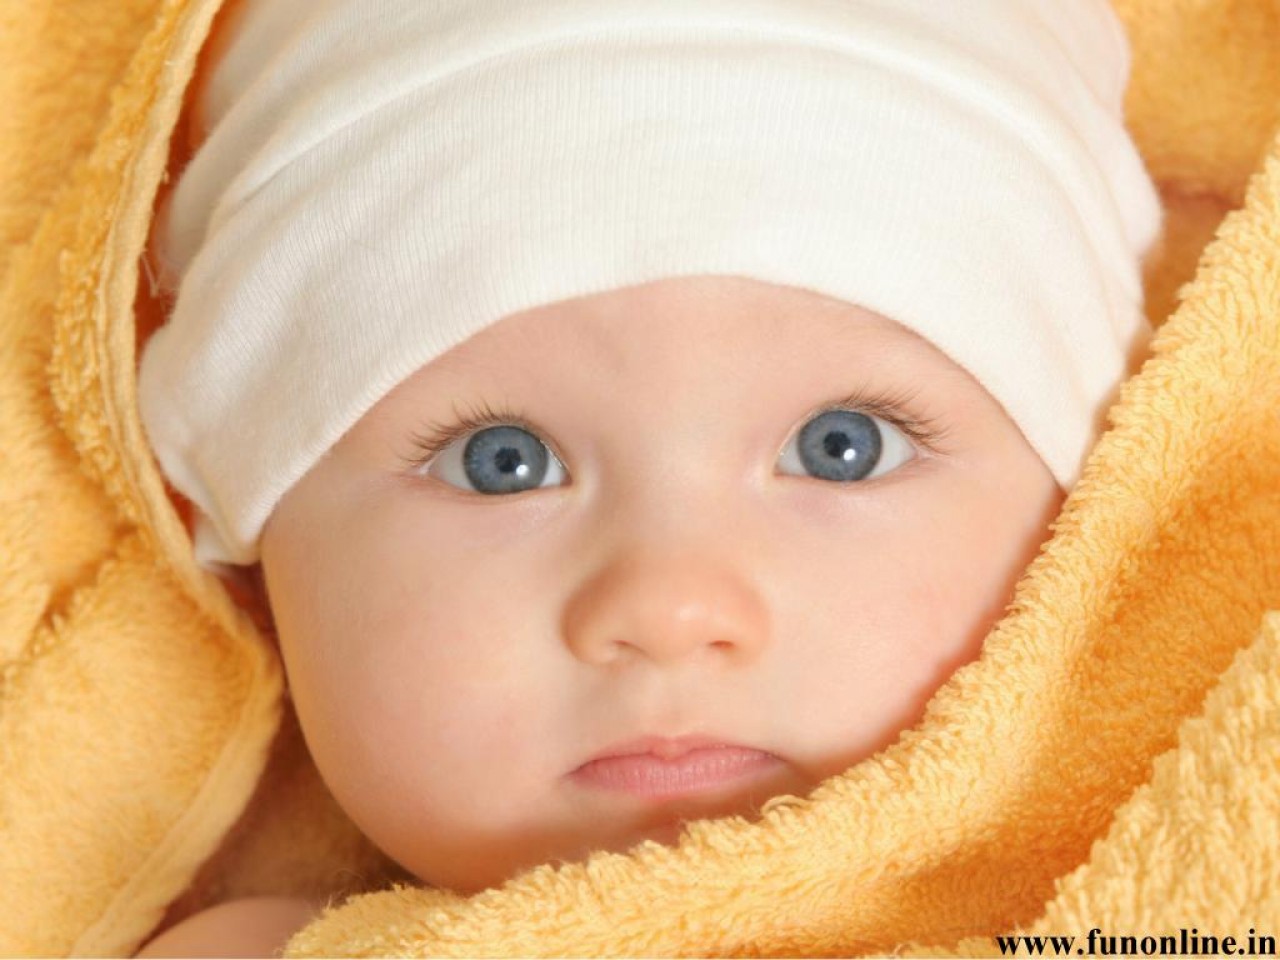 74+] Cute Baby Boy Pictures Wallpapers - WallpaperSafari